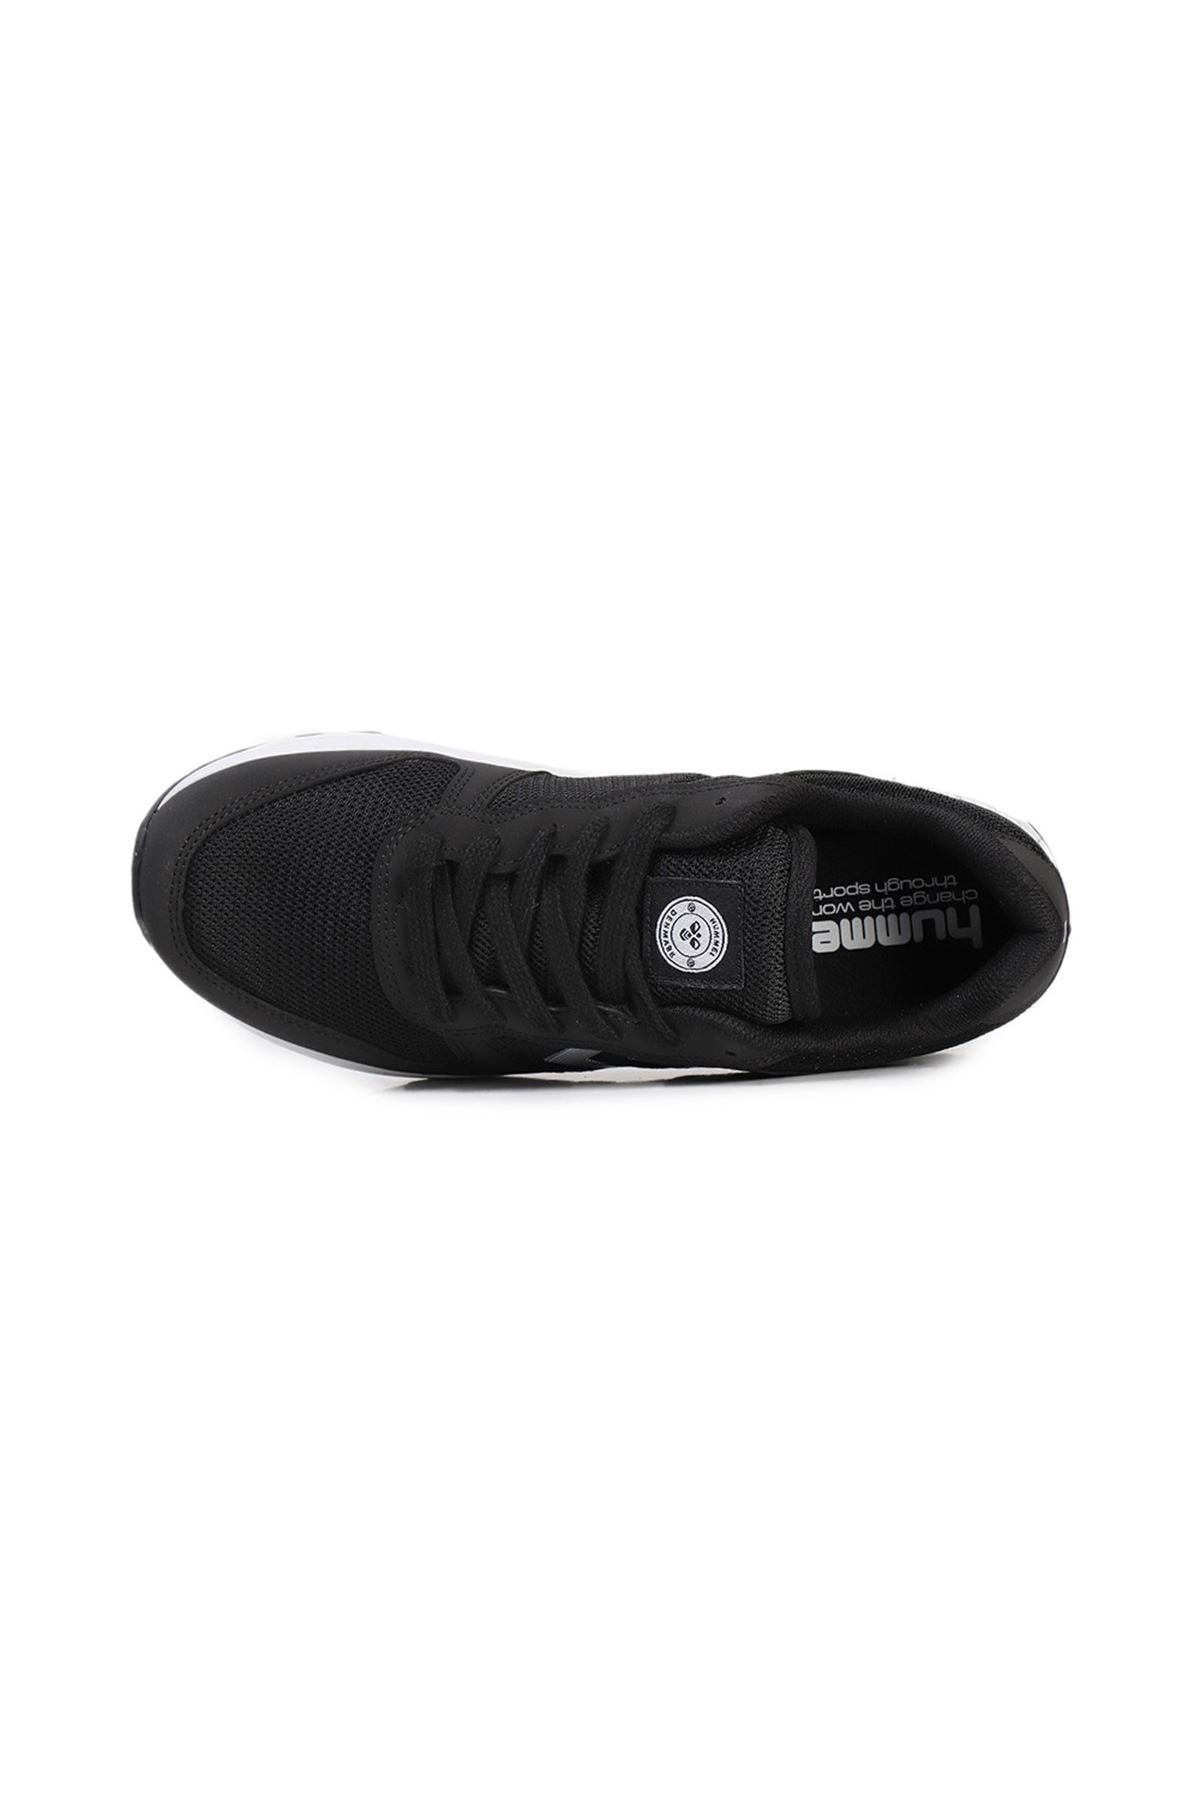 Porter - Unisex Black Sneakers